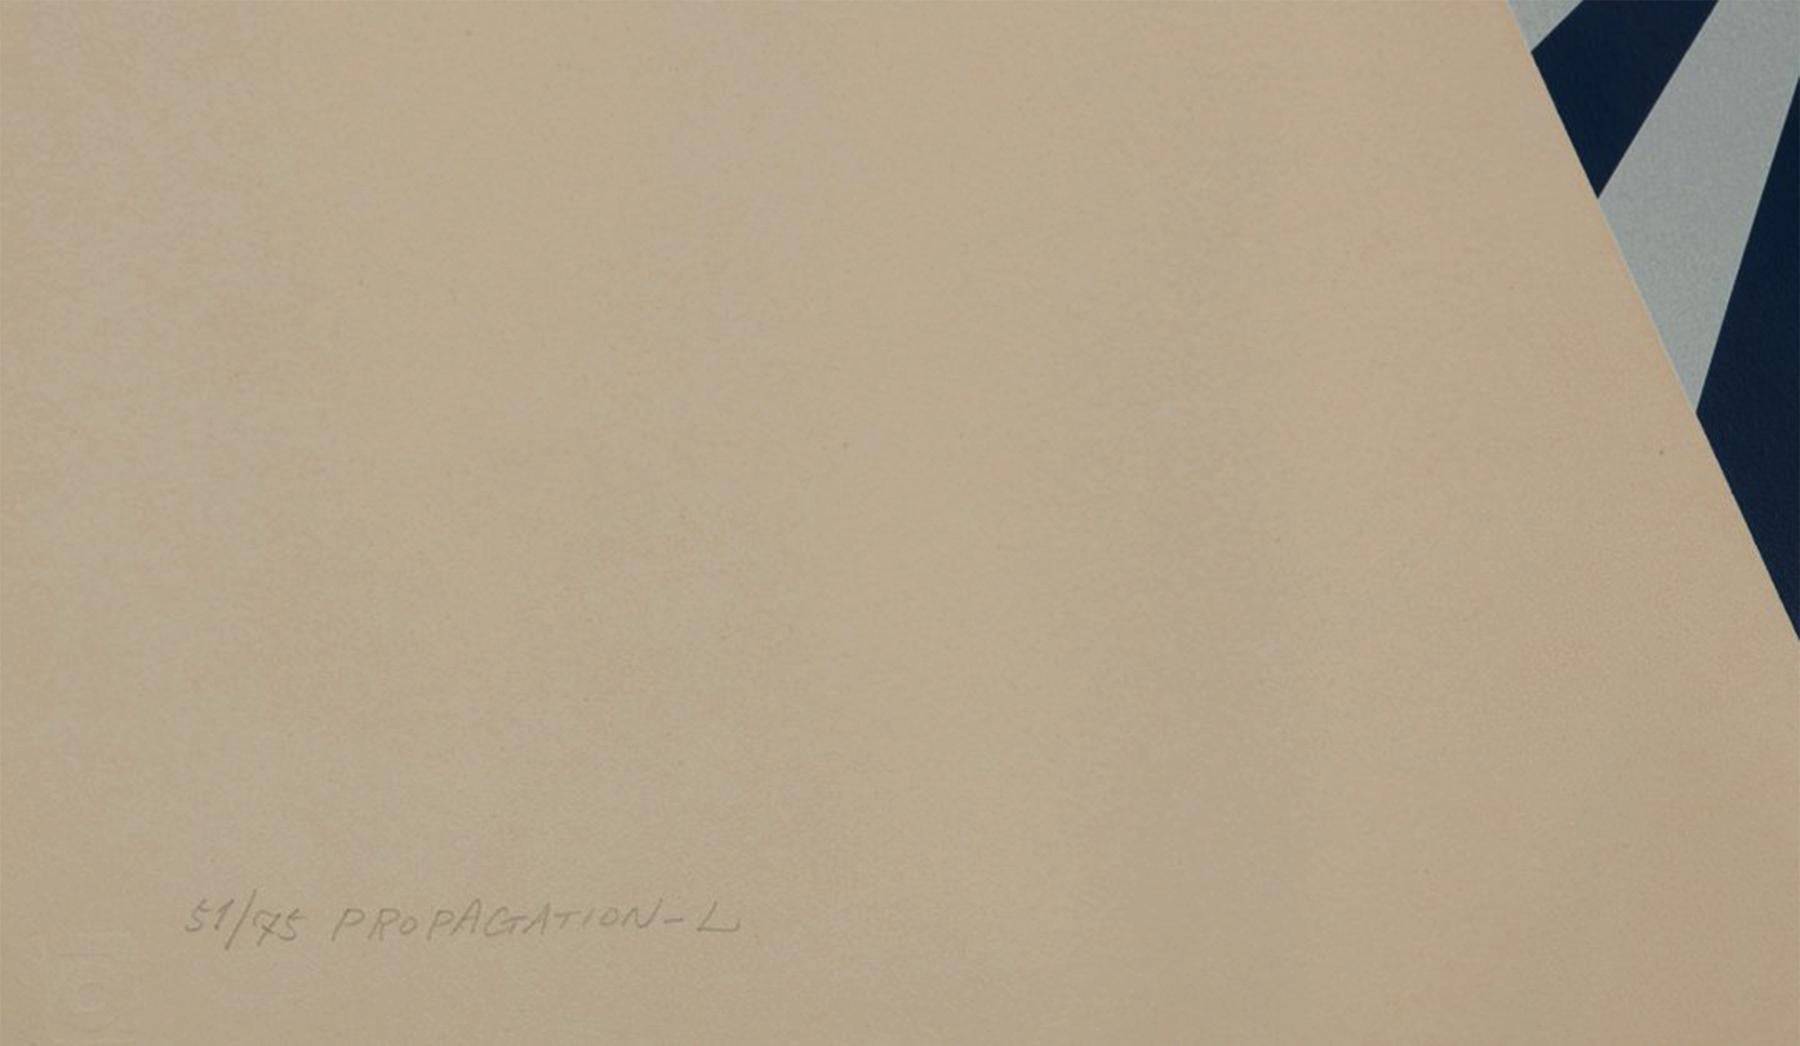 Propagation-L, mid century figurative abstract screenprint, 20th century artist For Sale 1